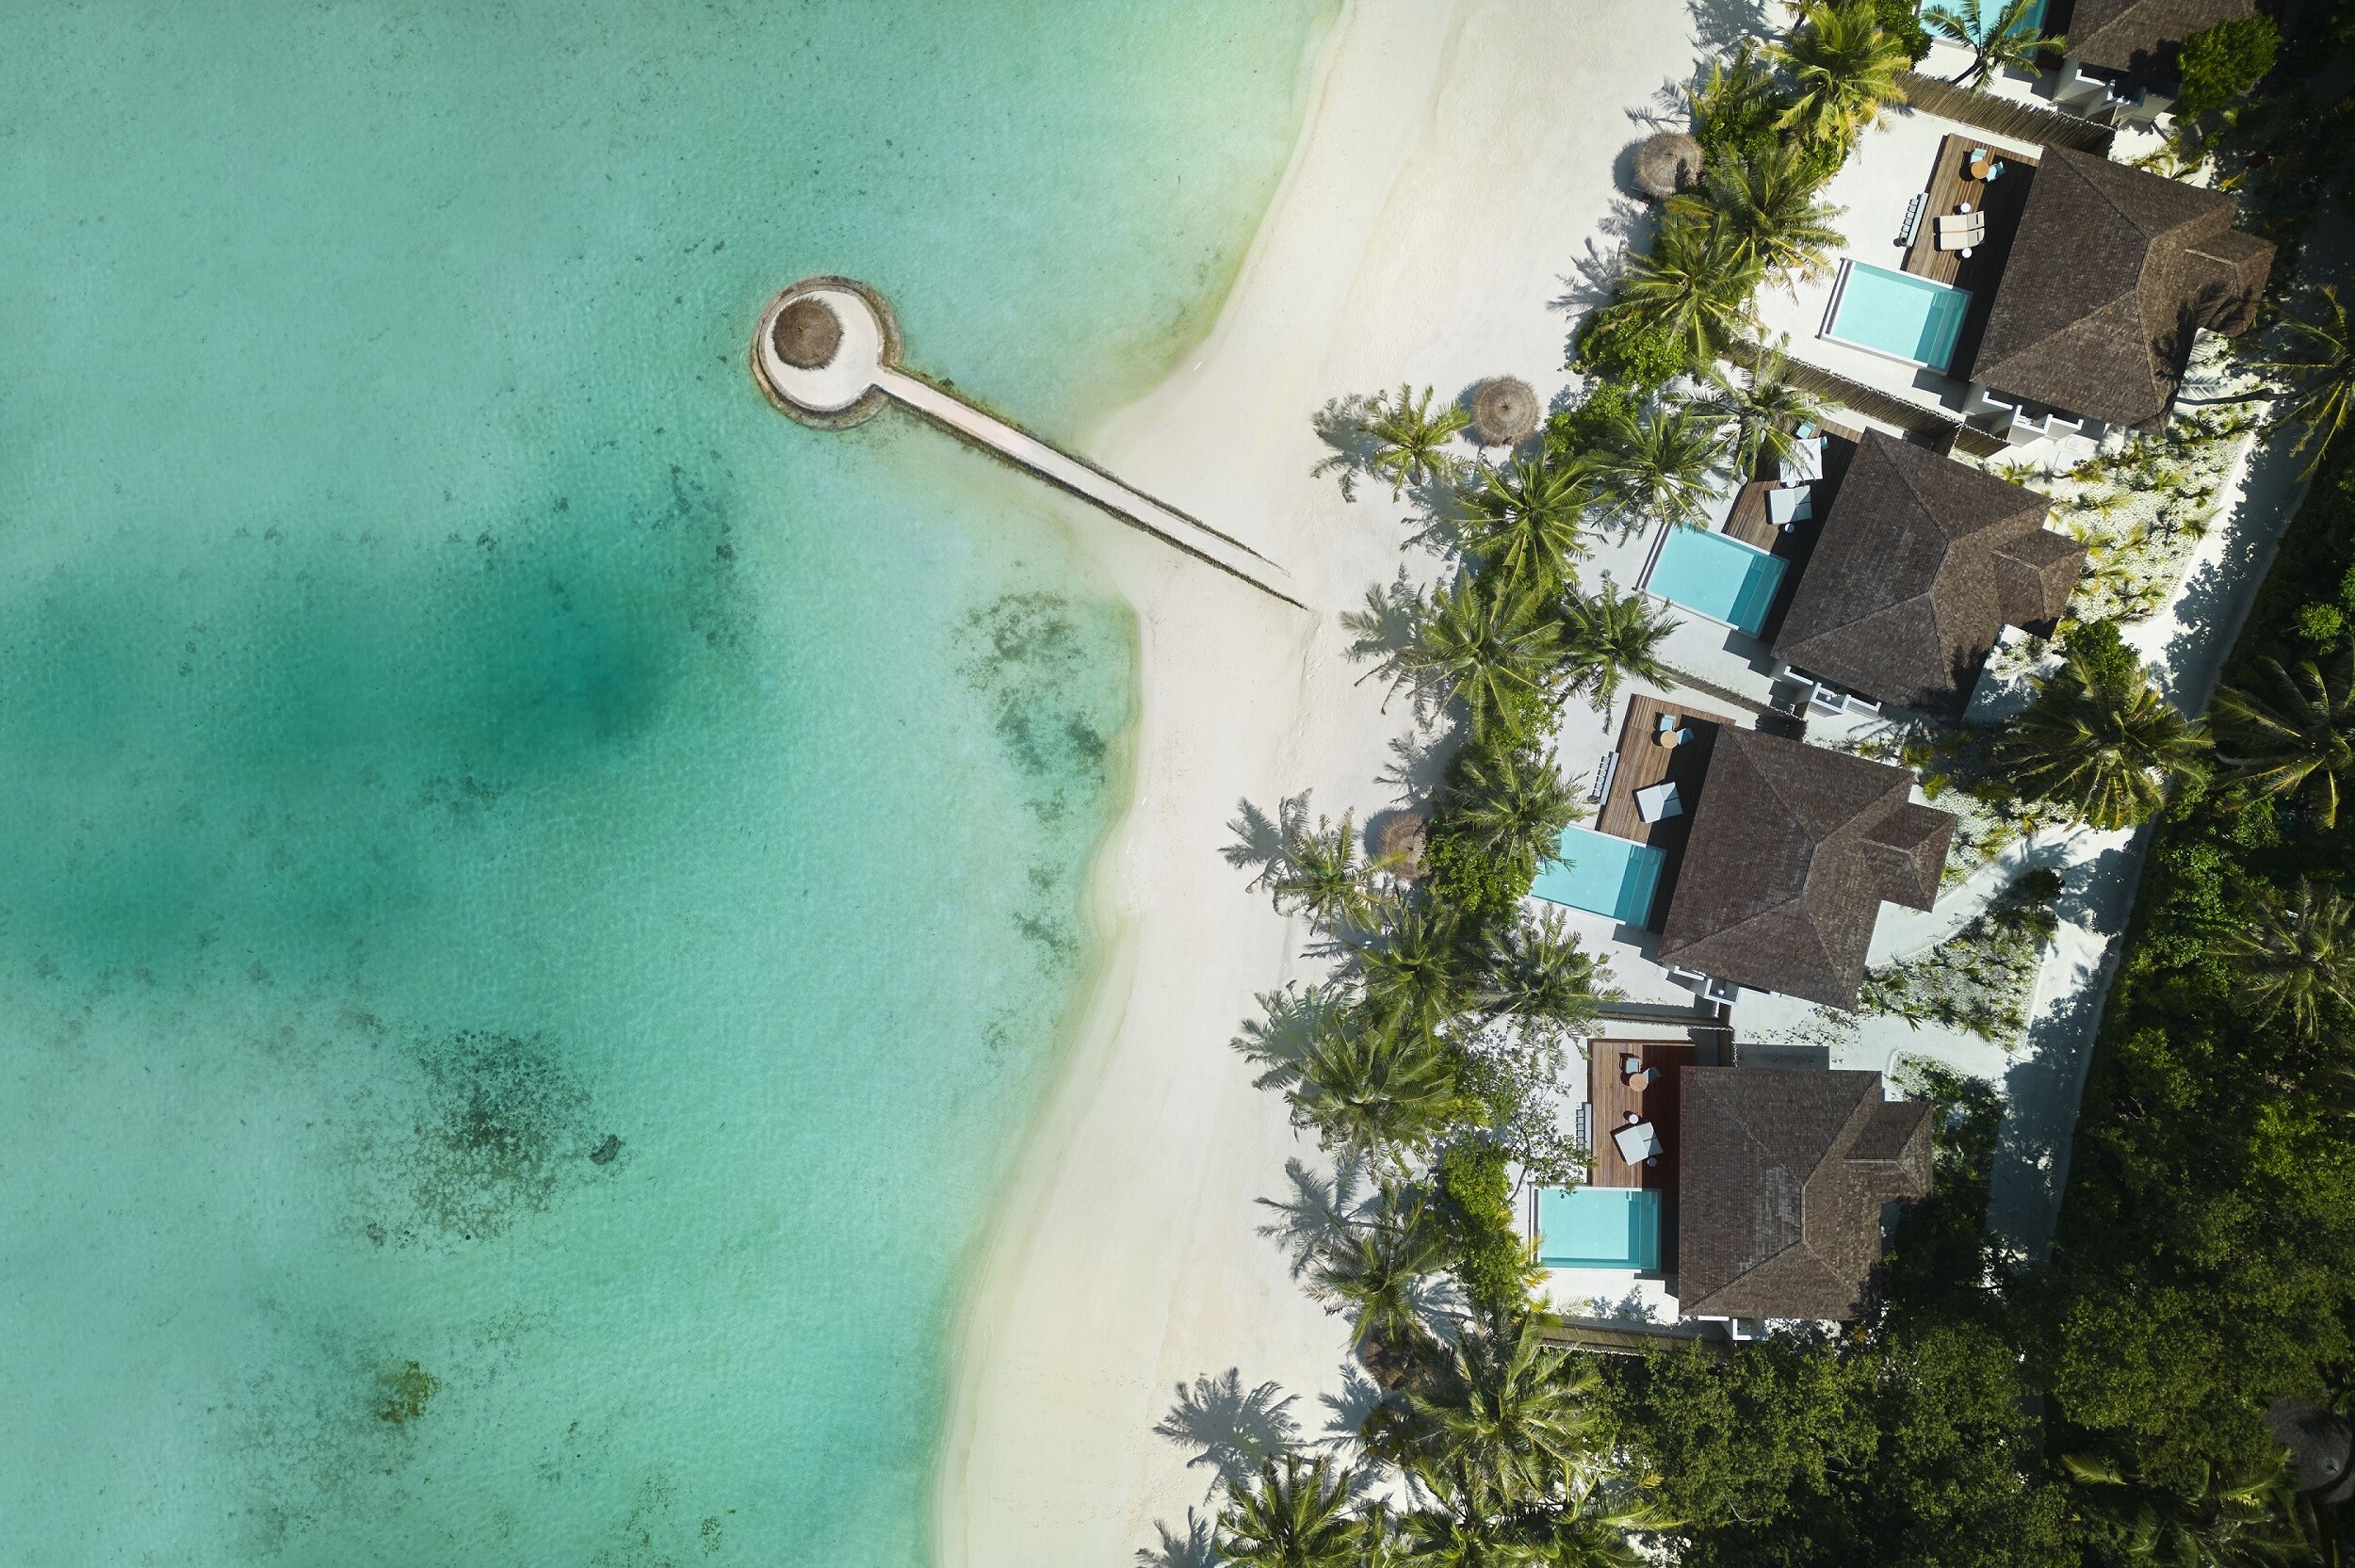 Newly Renovated Anantara Veli Maldives Resort Reopens with a Fresh, Wellness-Centric Identity